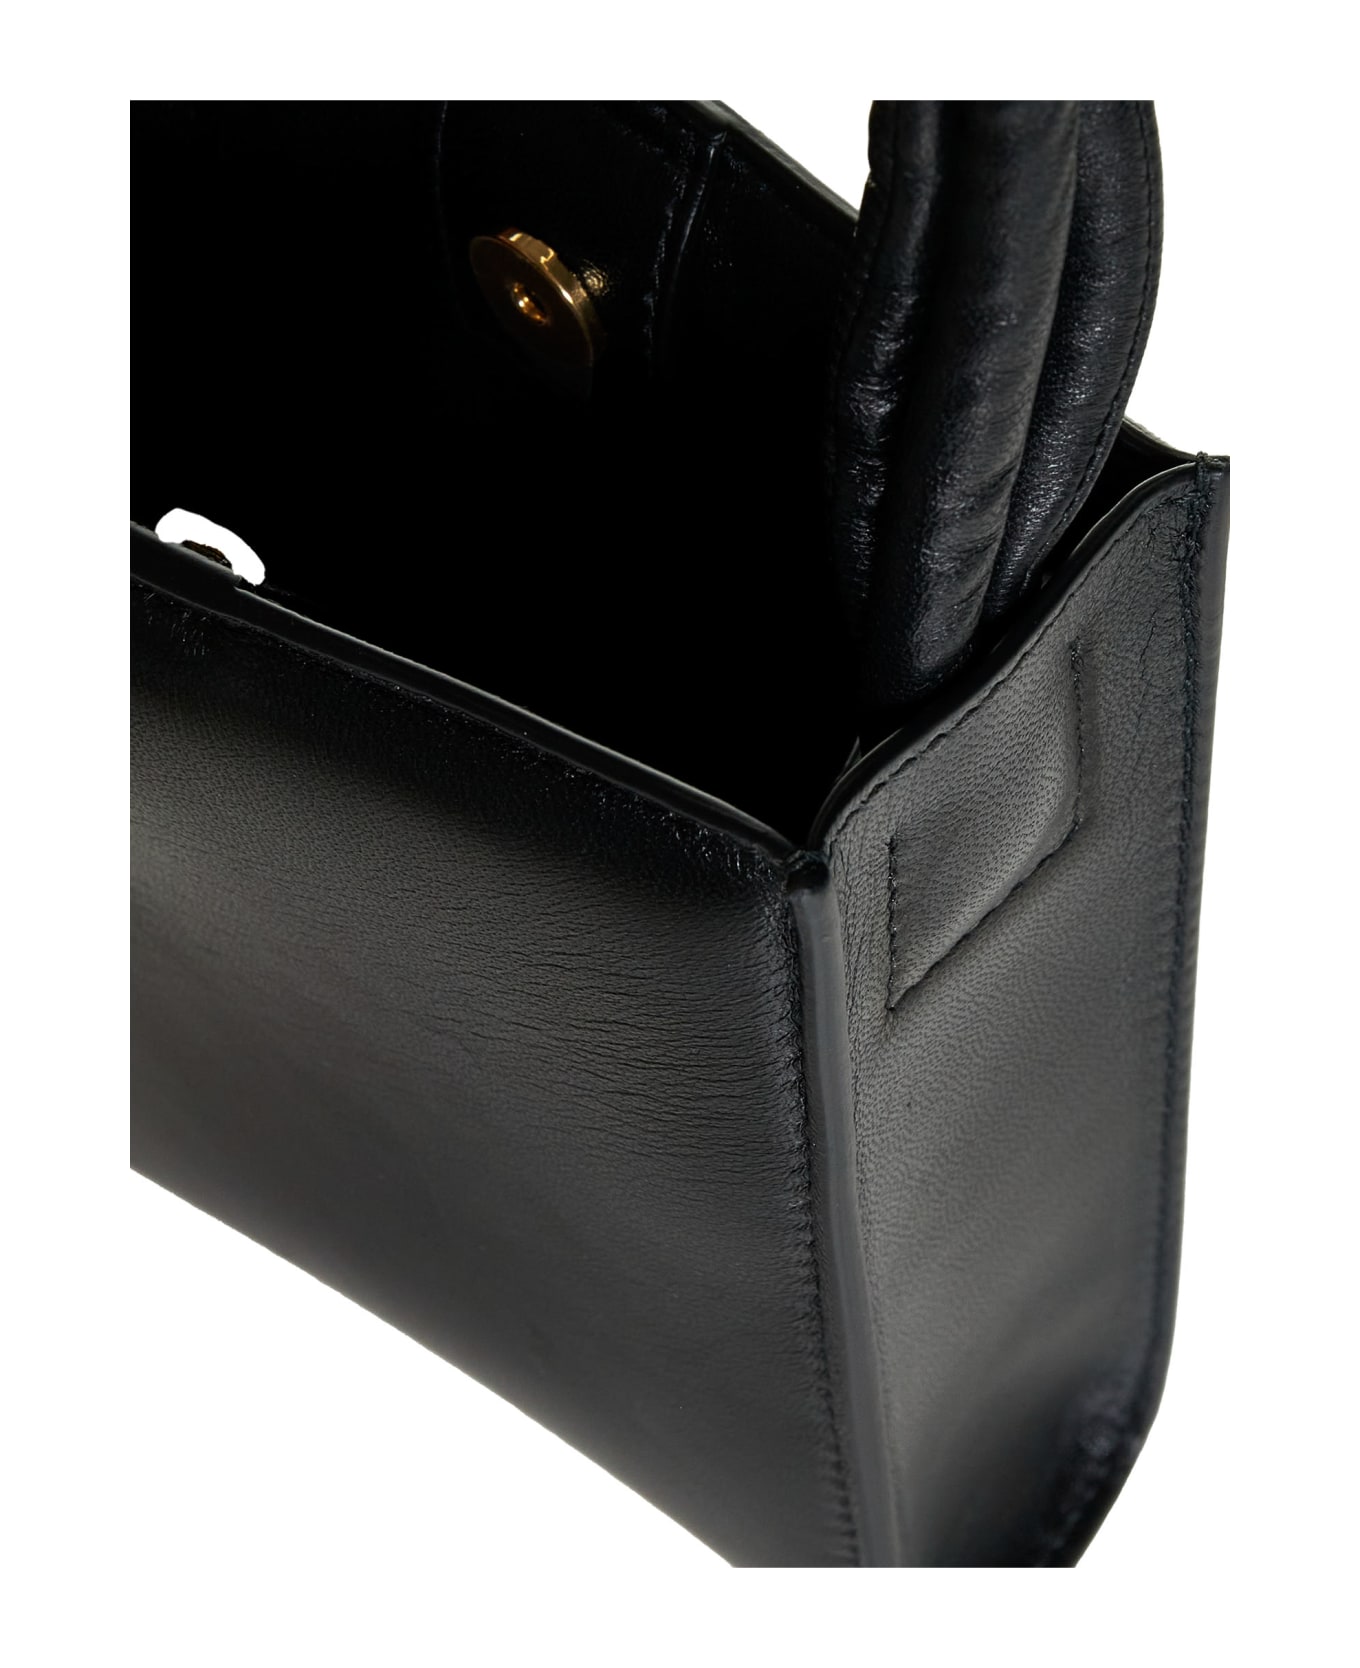 Jil Sander Black Leather Tangle Crossbody Bag - Black